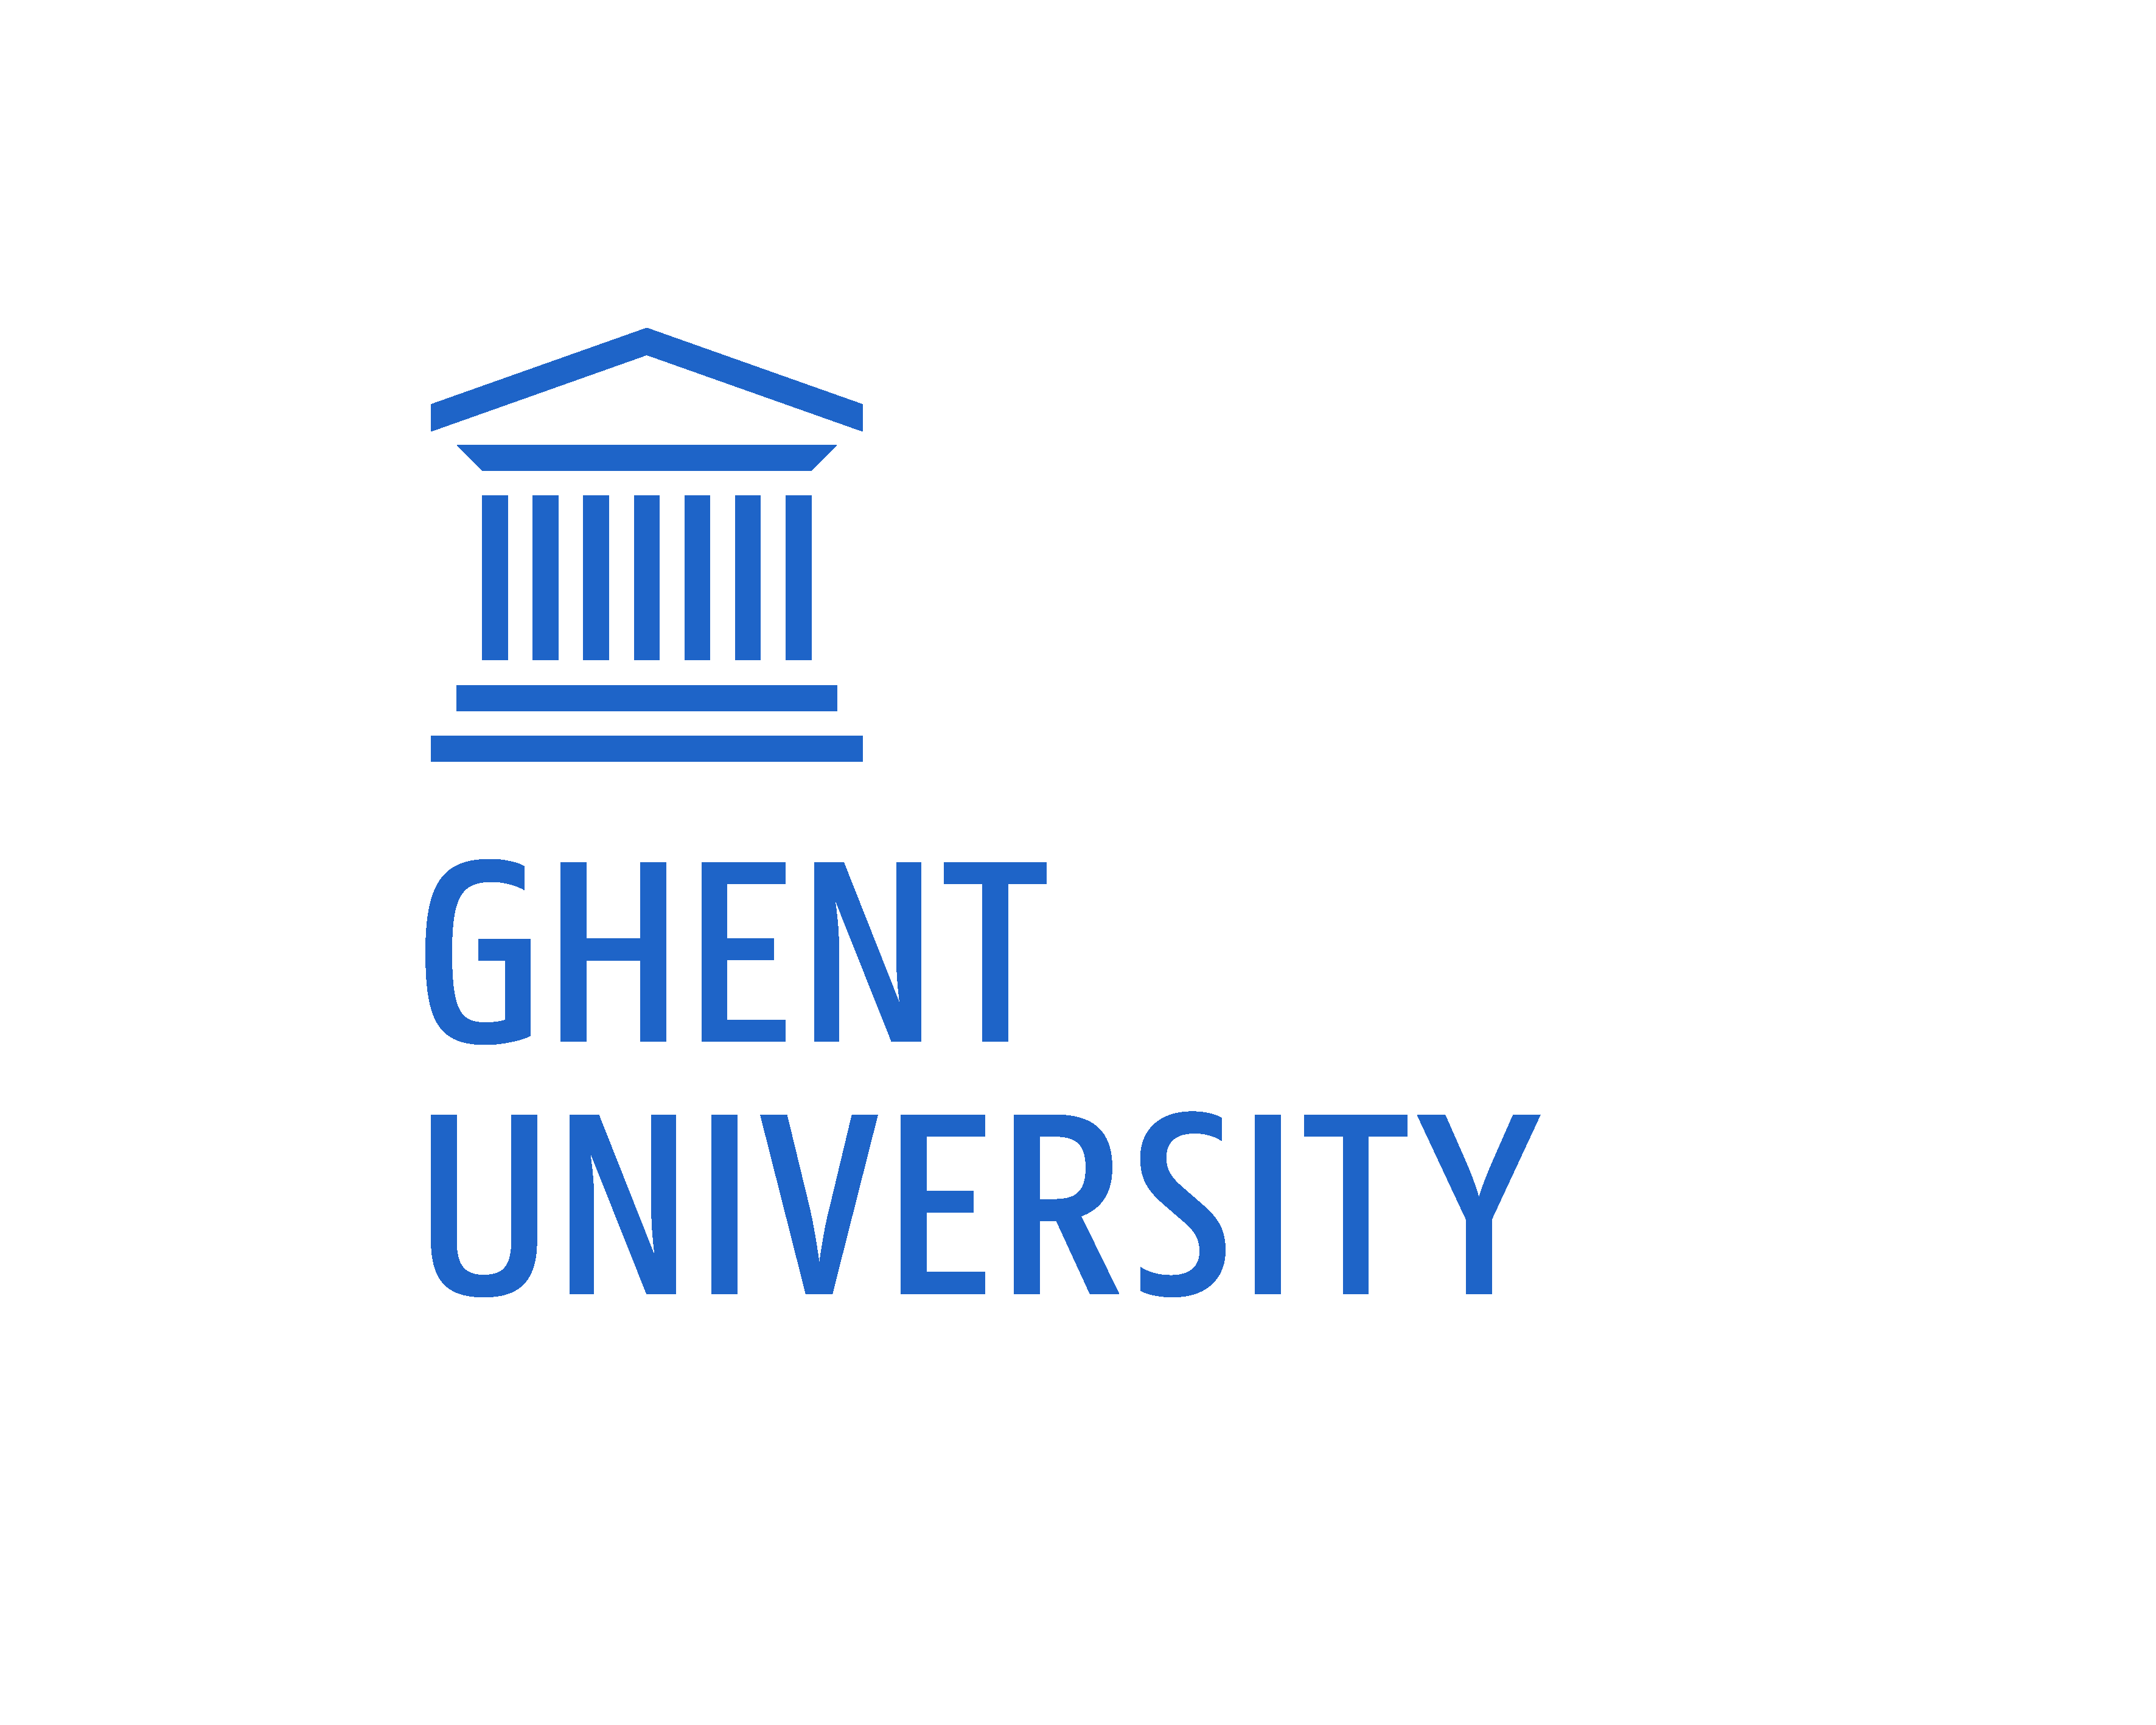 Ghent University logo